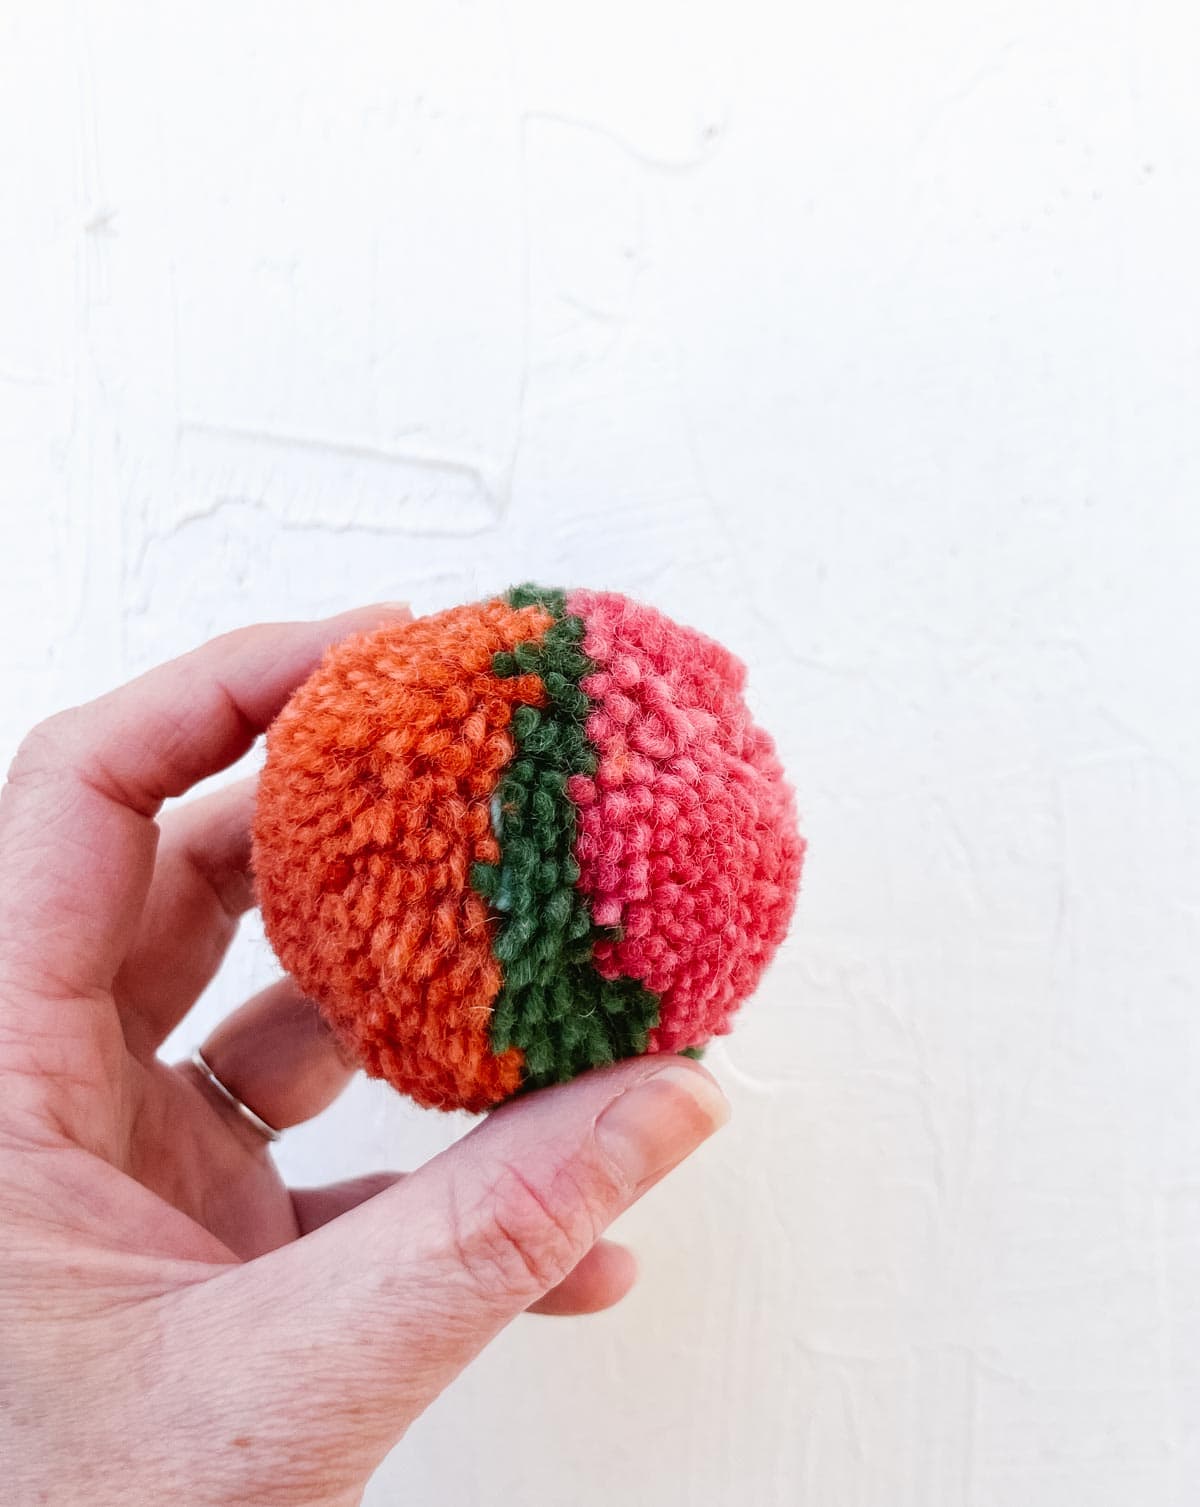 A DIY pom pom made with three colors of yarn.